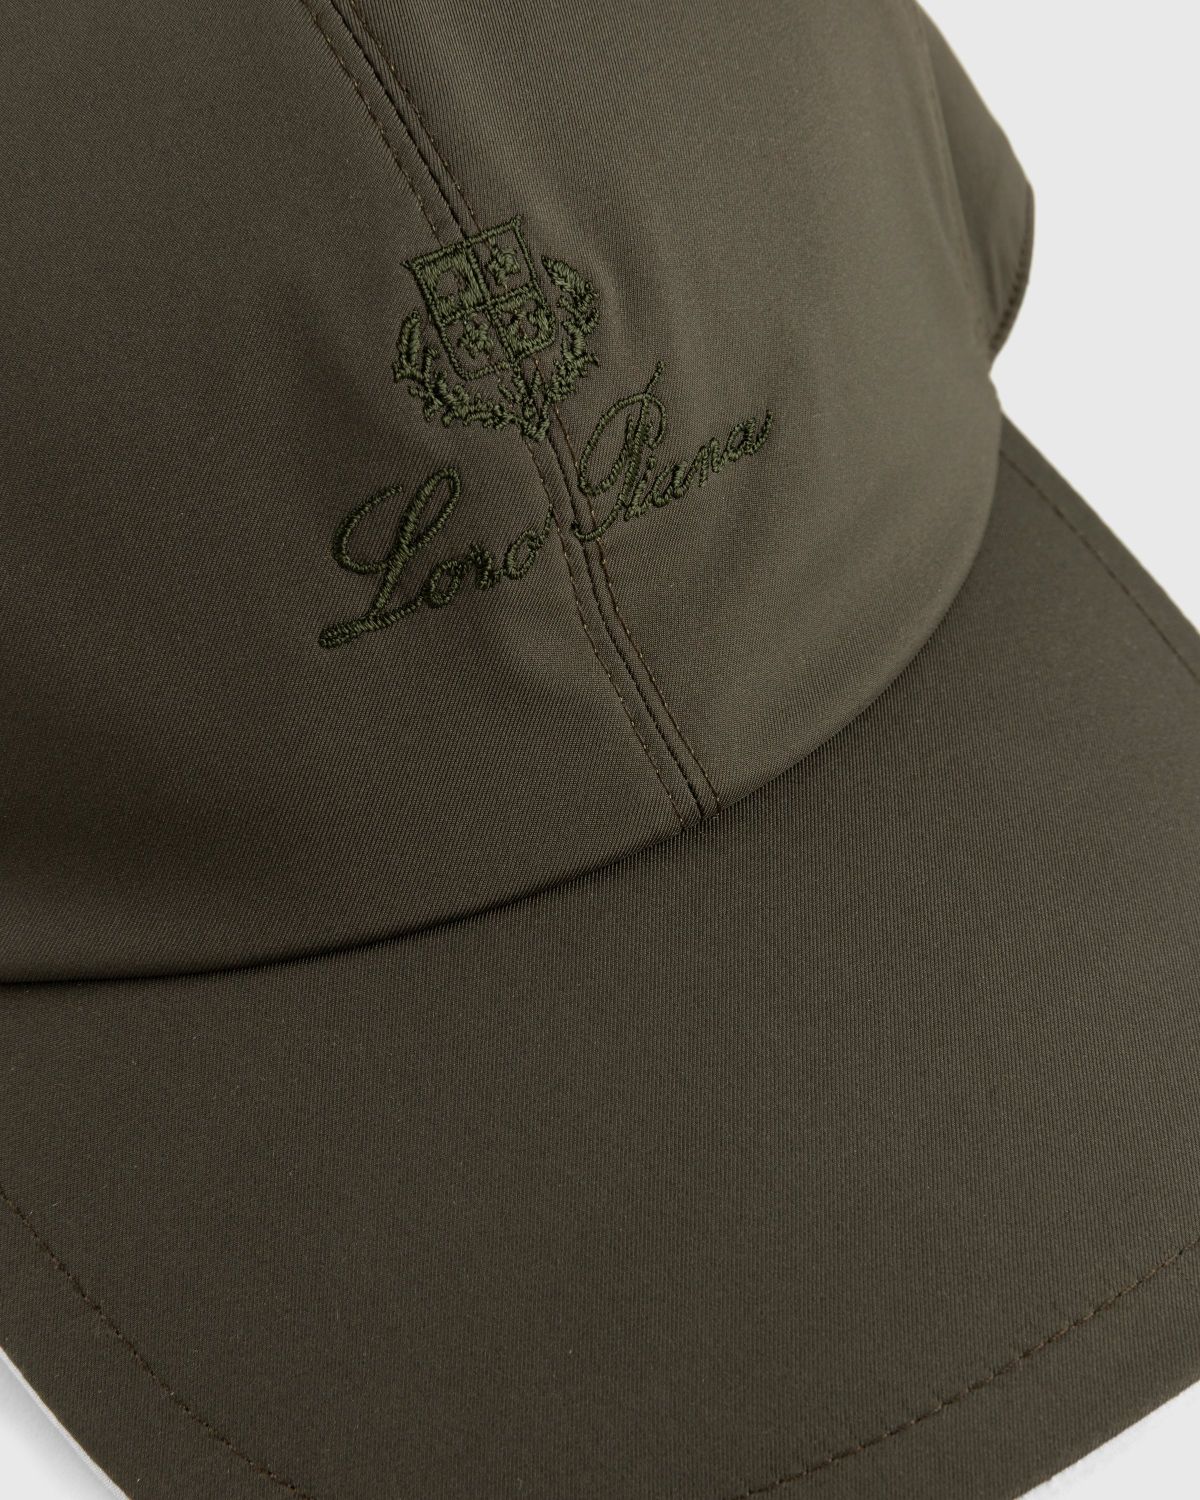 Loro Piana – Bicolor Baseball Cap Dark Military/Ivory - Hats - Black - Image 4